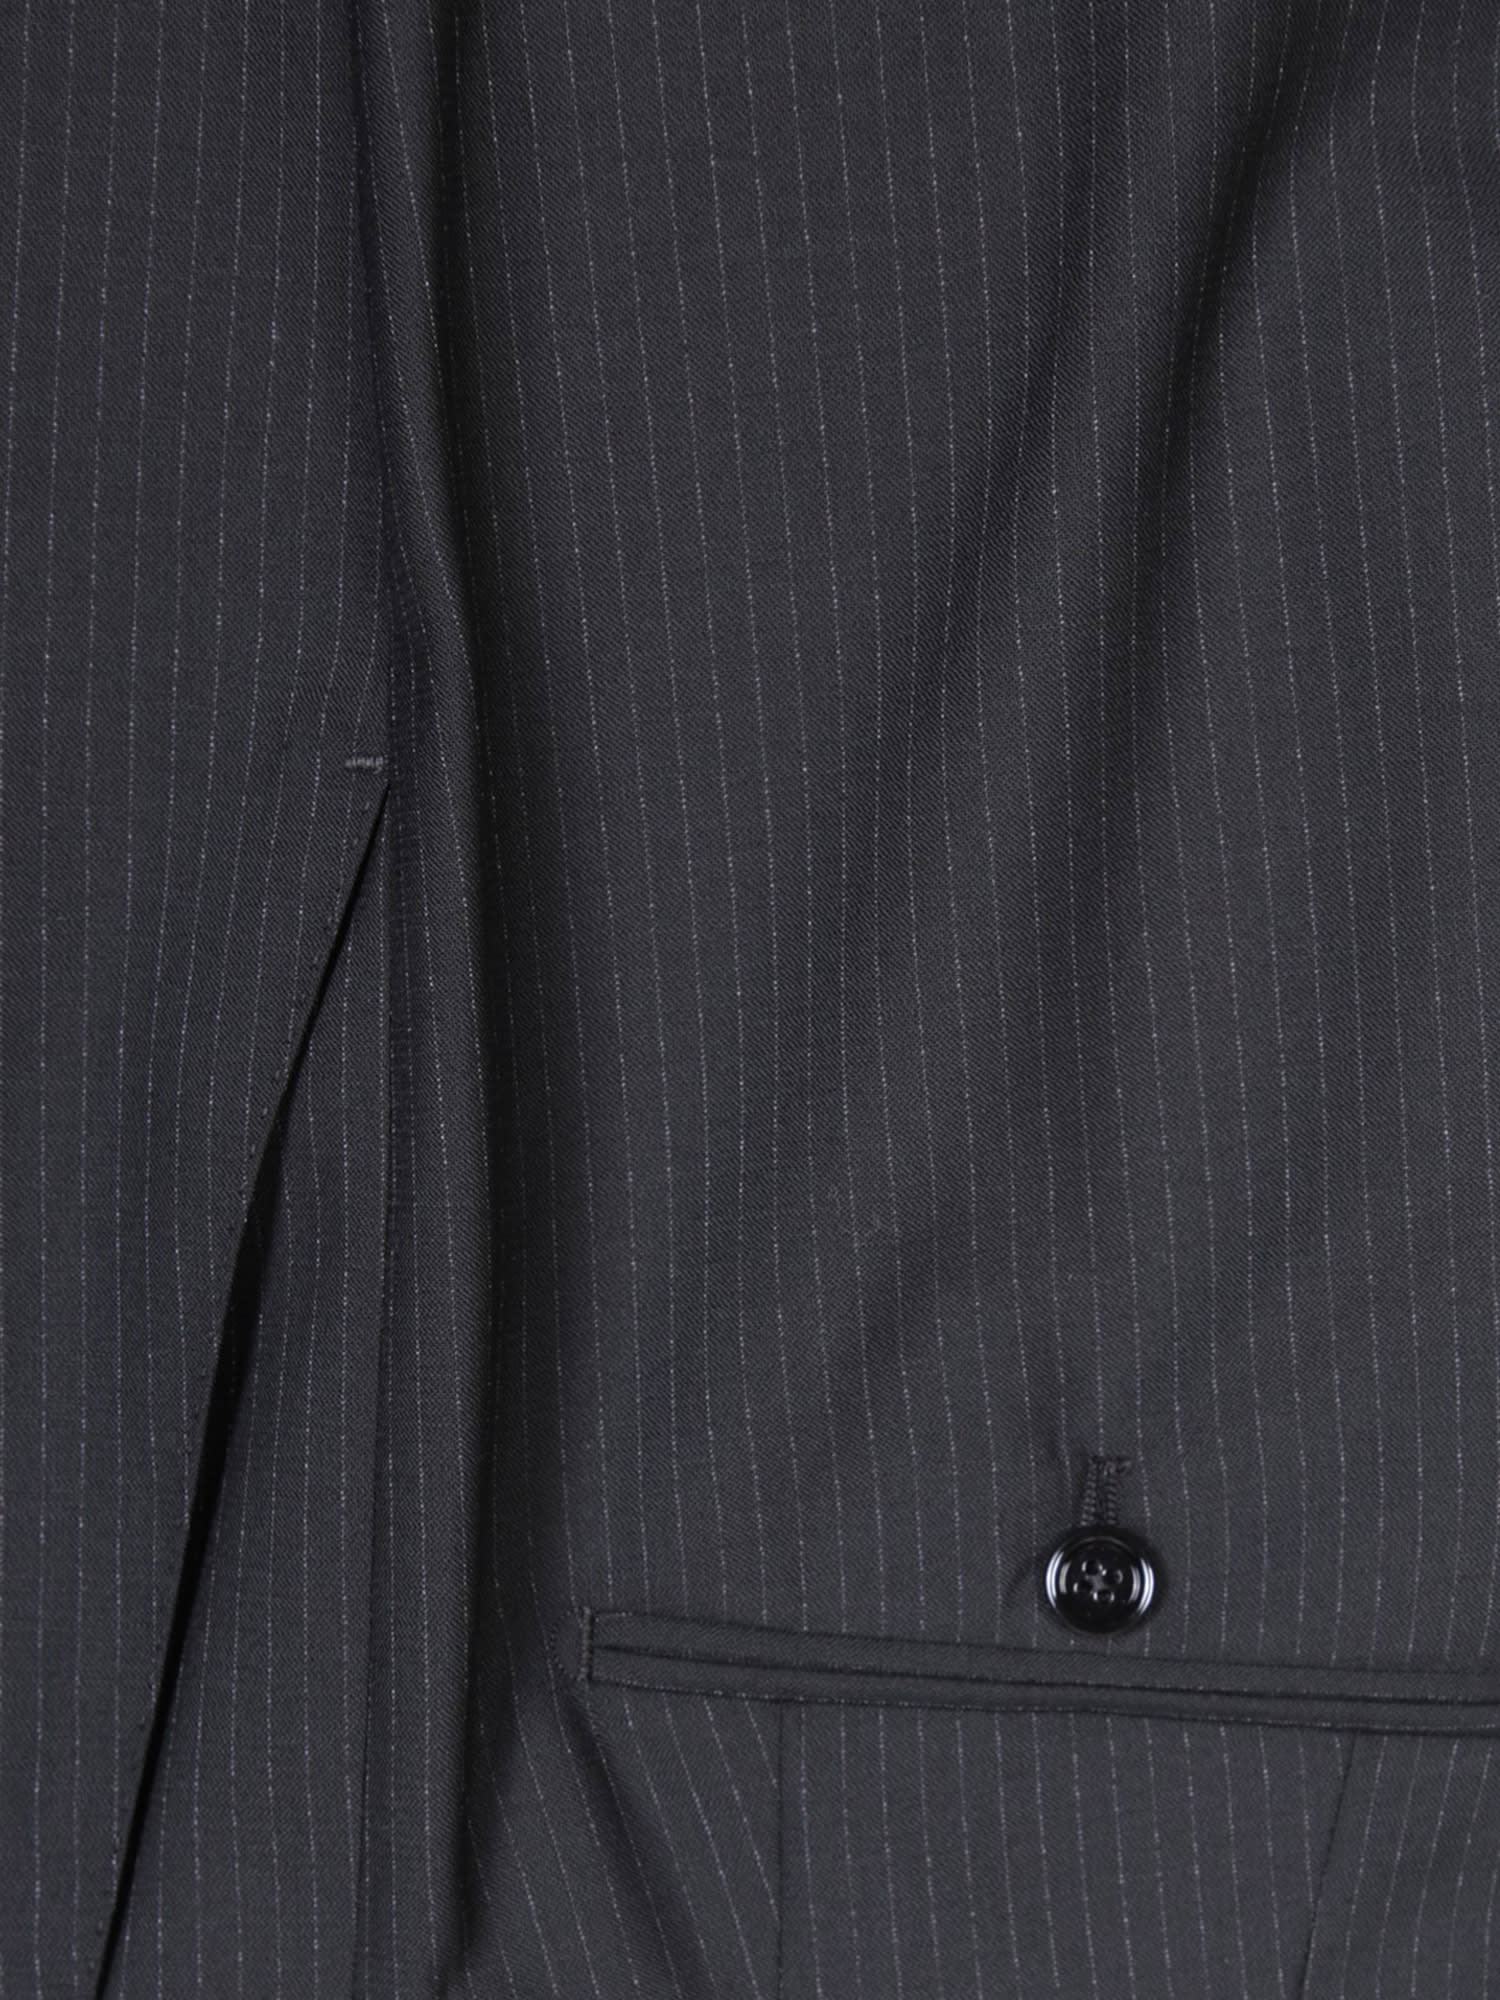 Shop Lardini Attitude Black Suit